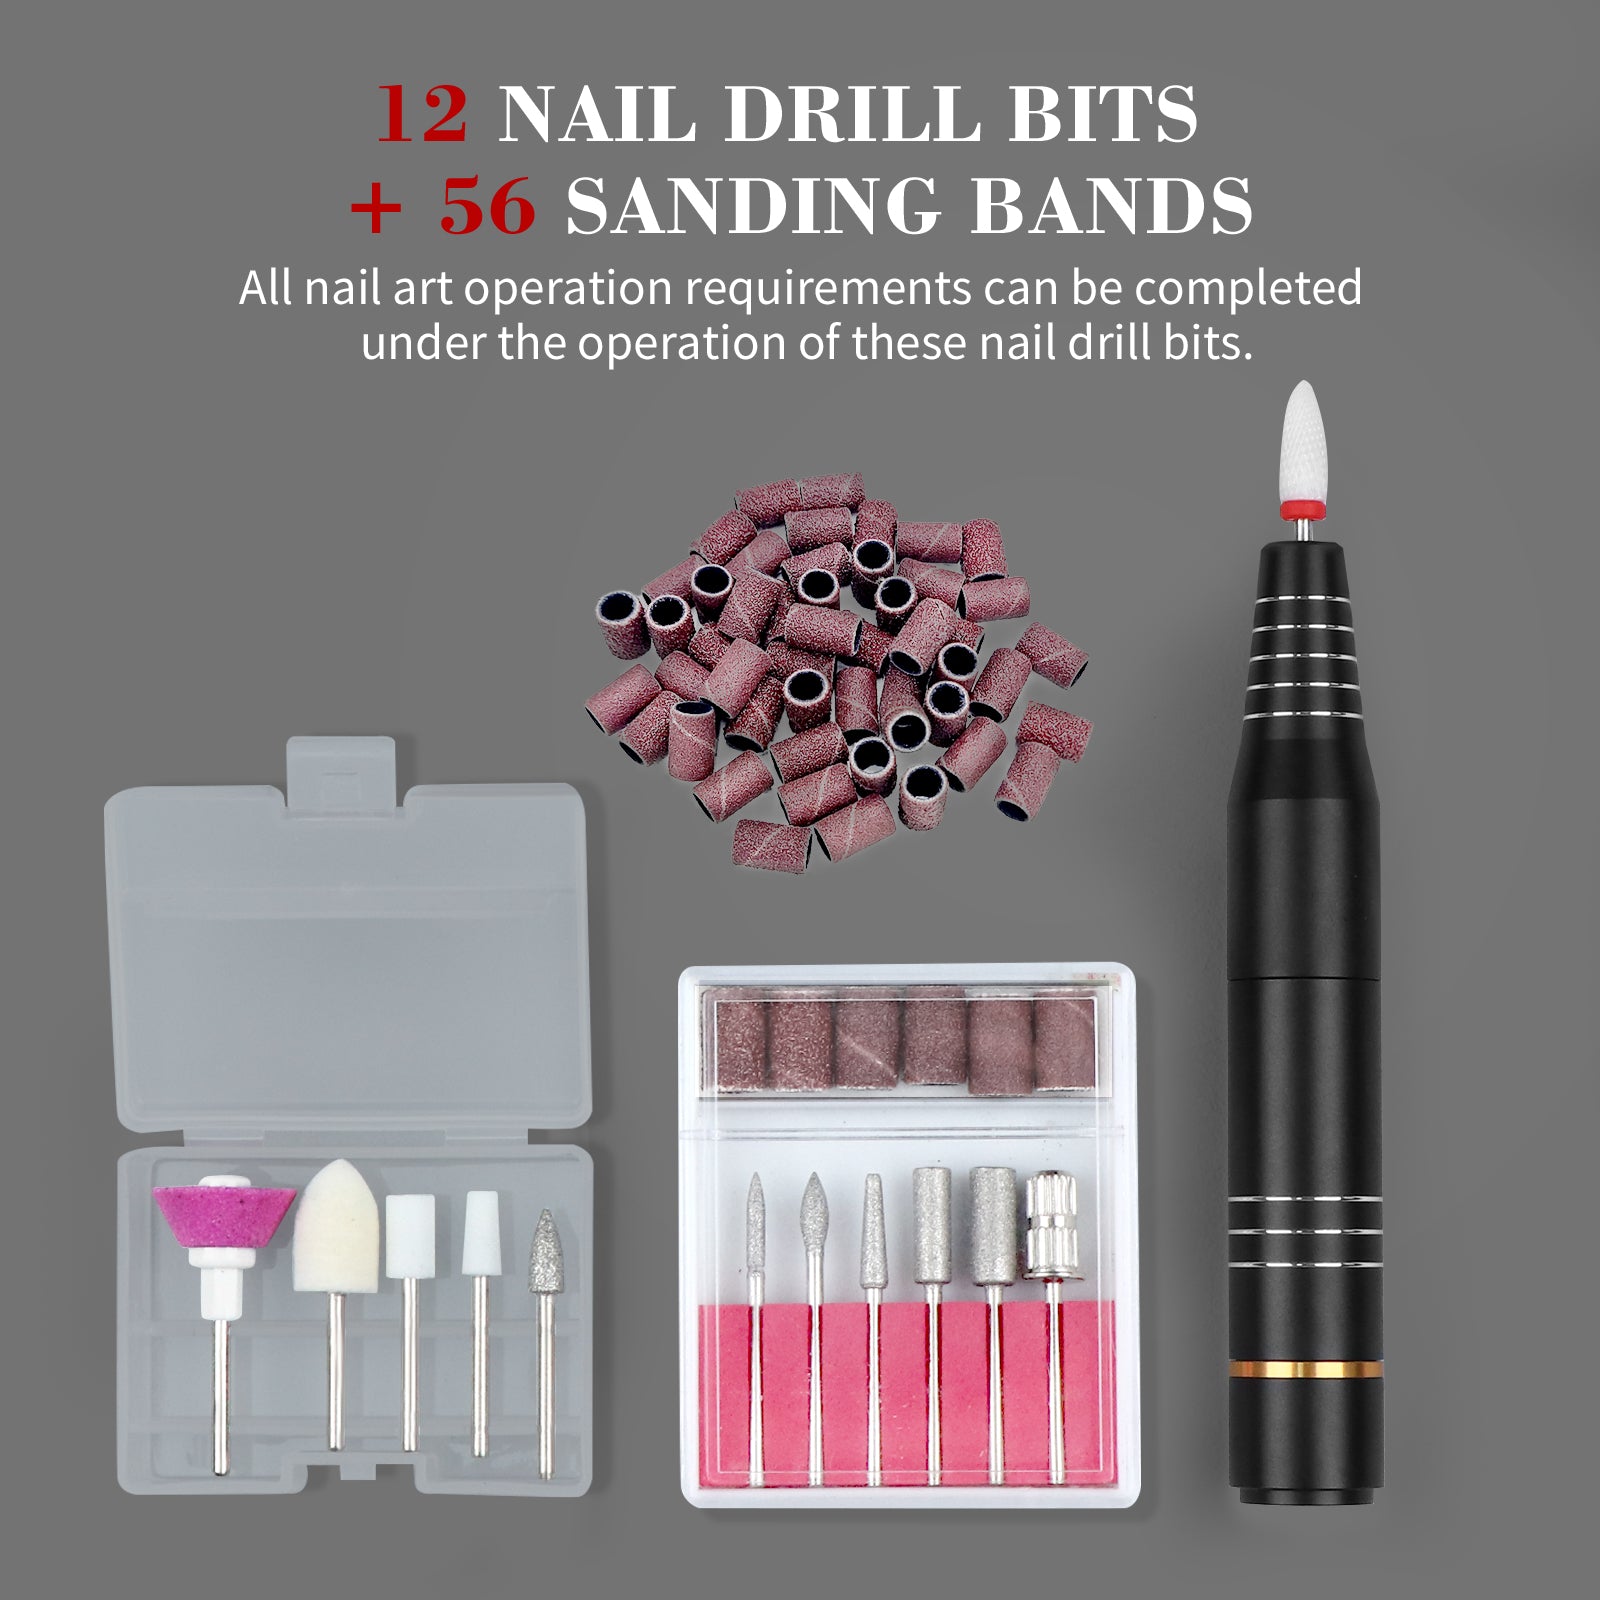 [US ONLY]Portable Electric Nail File – Nail Drill Kit Black